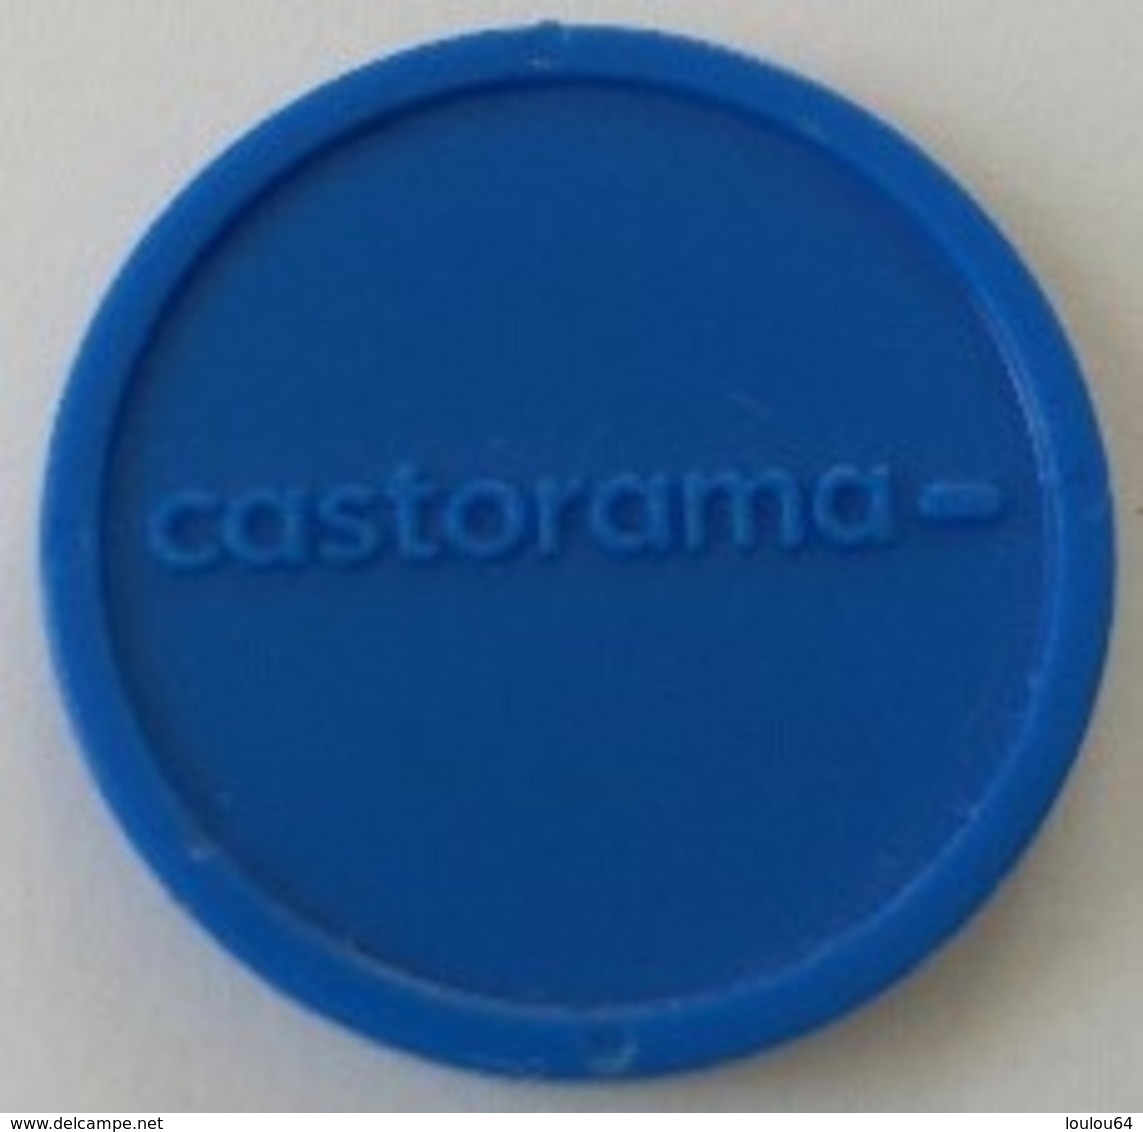 Jeton De Caddie - Magasins - CASTORAMA - En Plastique - - Trolley Token/Shopping Trolley Chip